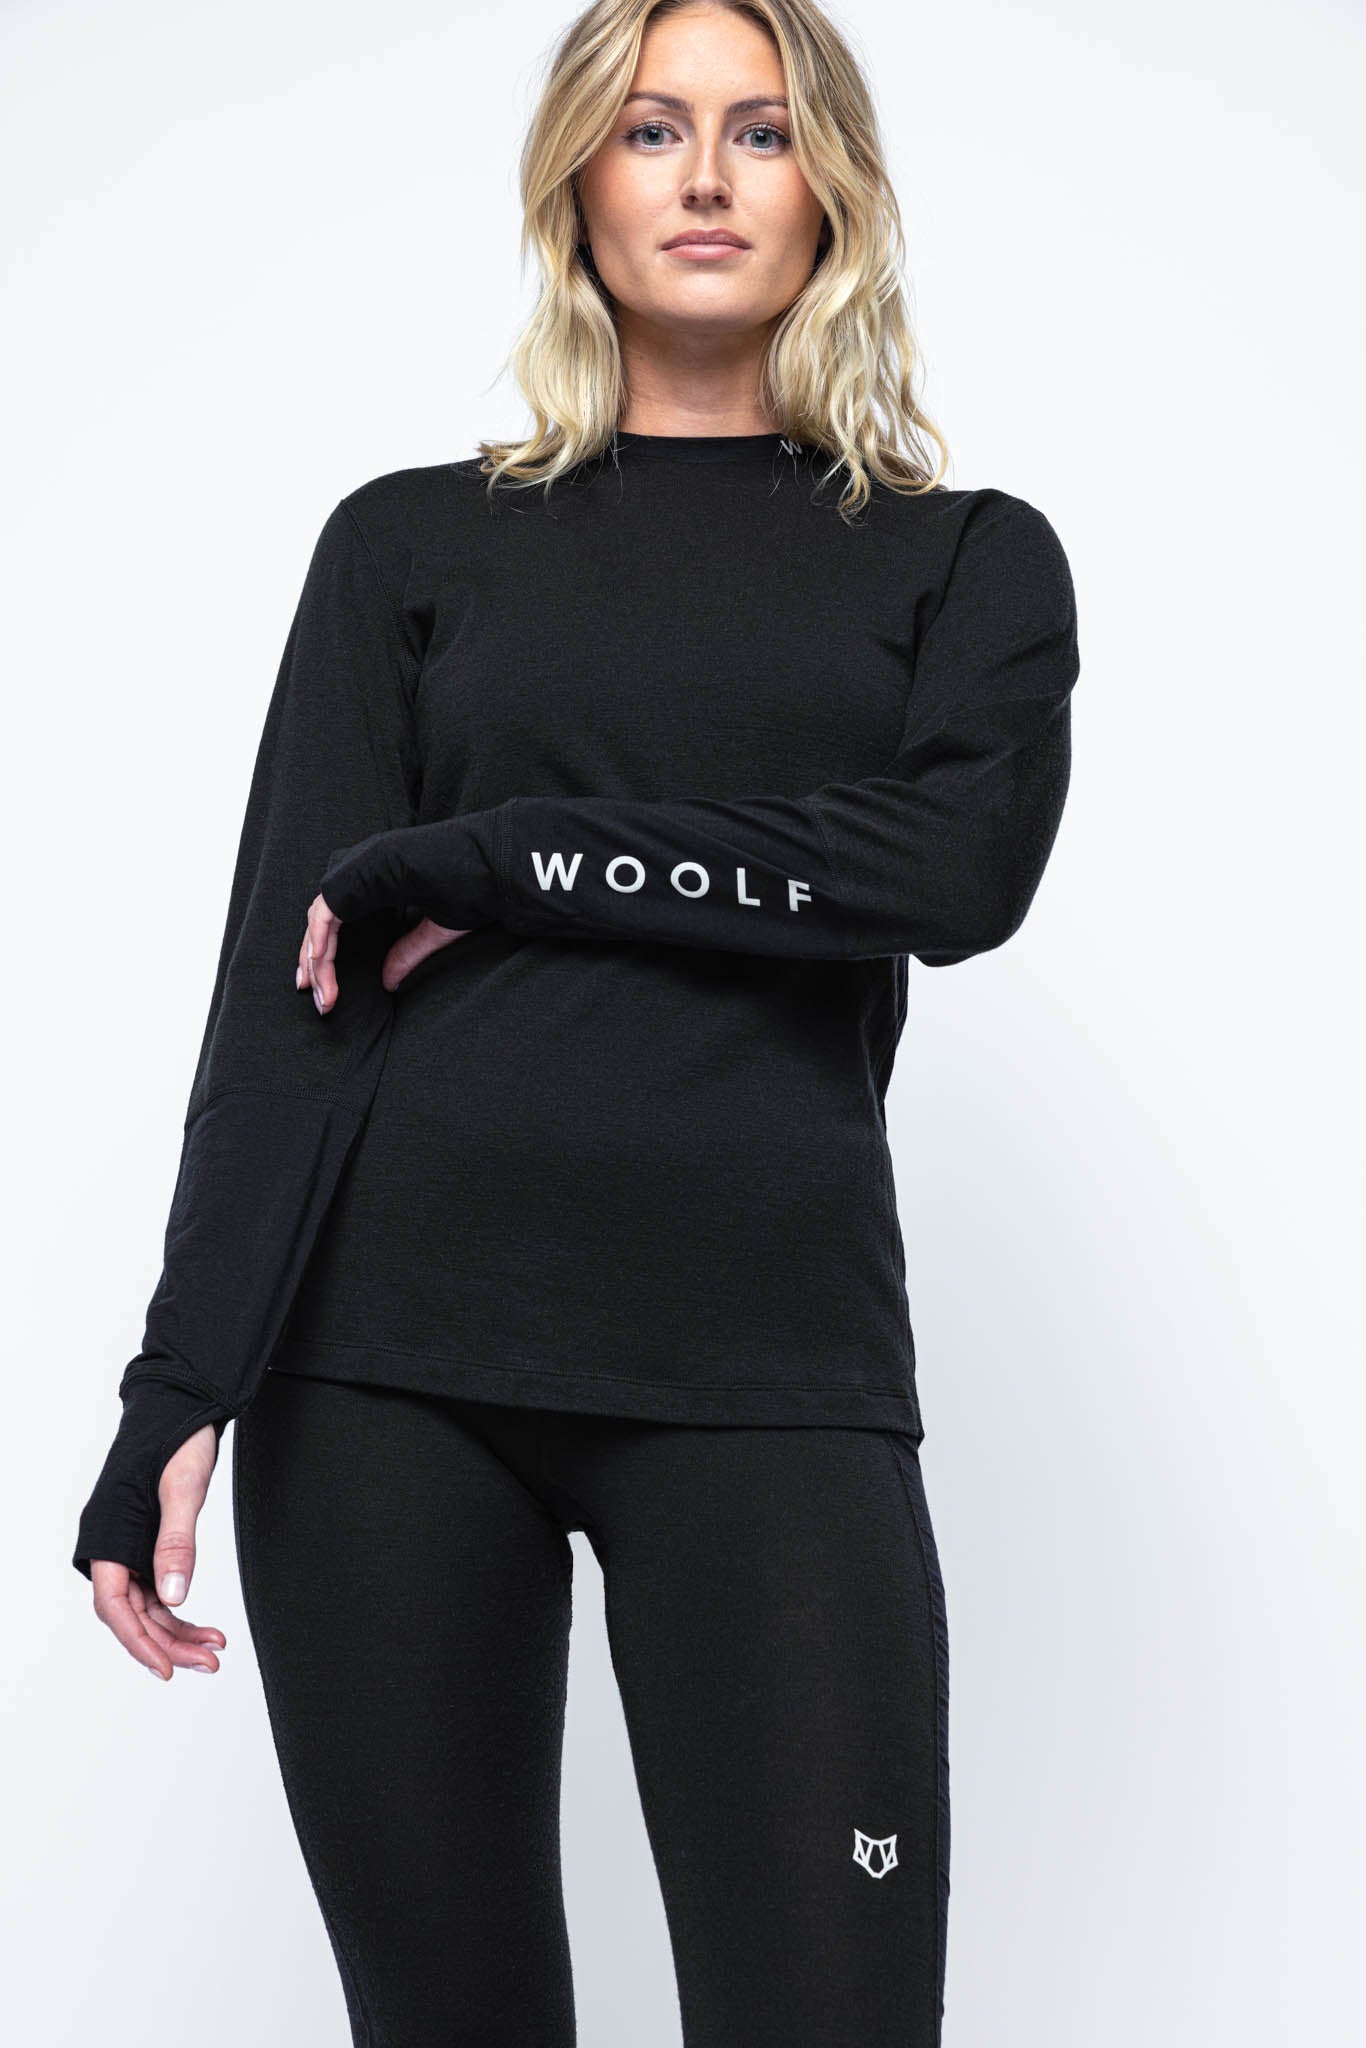 Women's Merino Wool Base Layer Collection